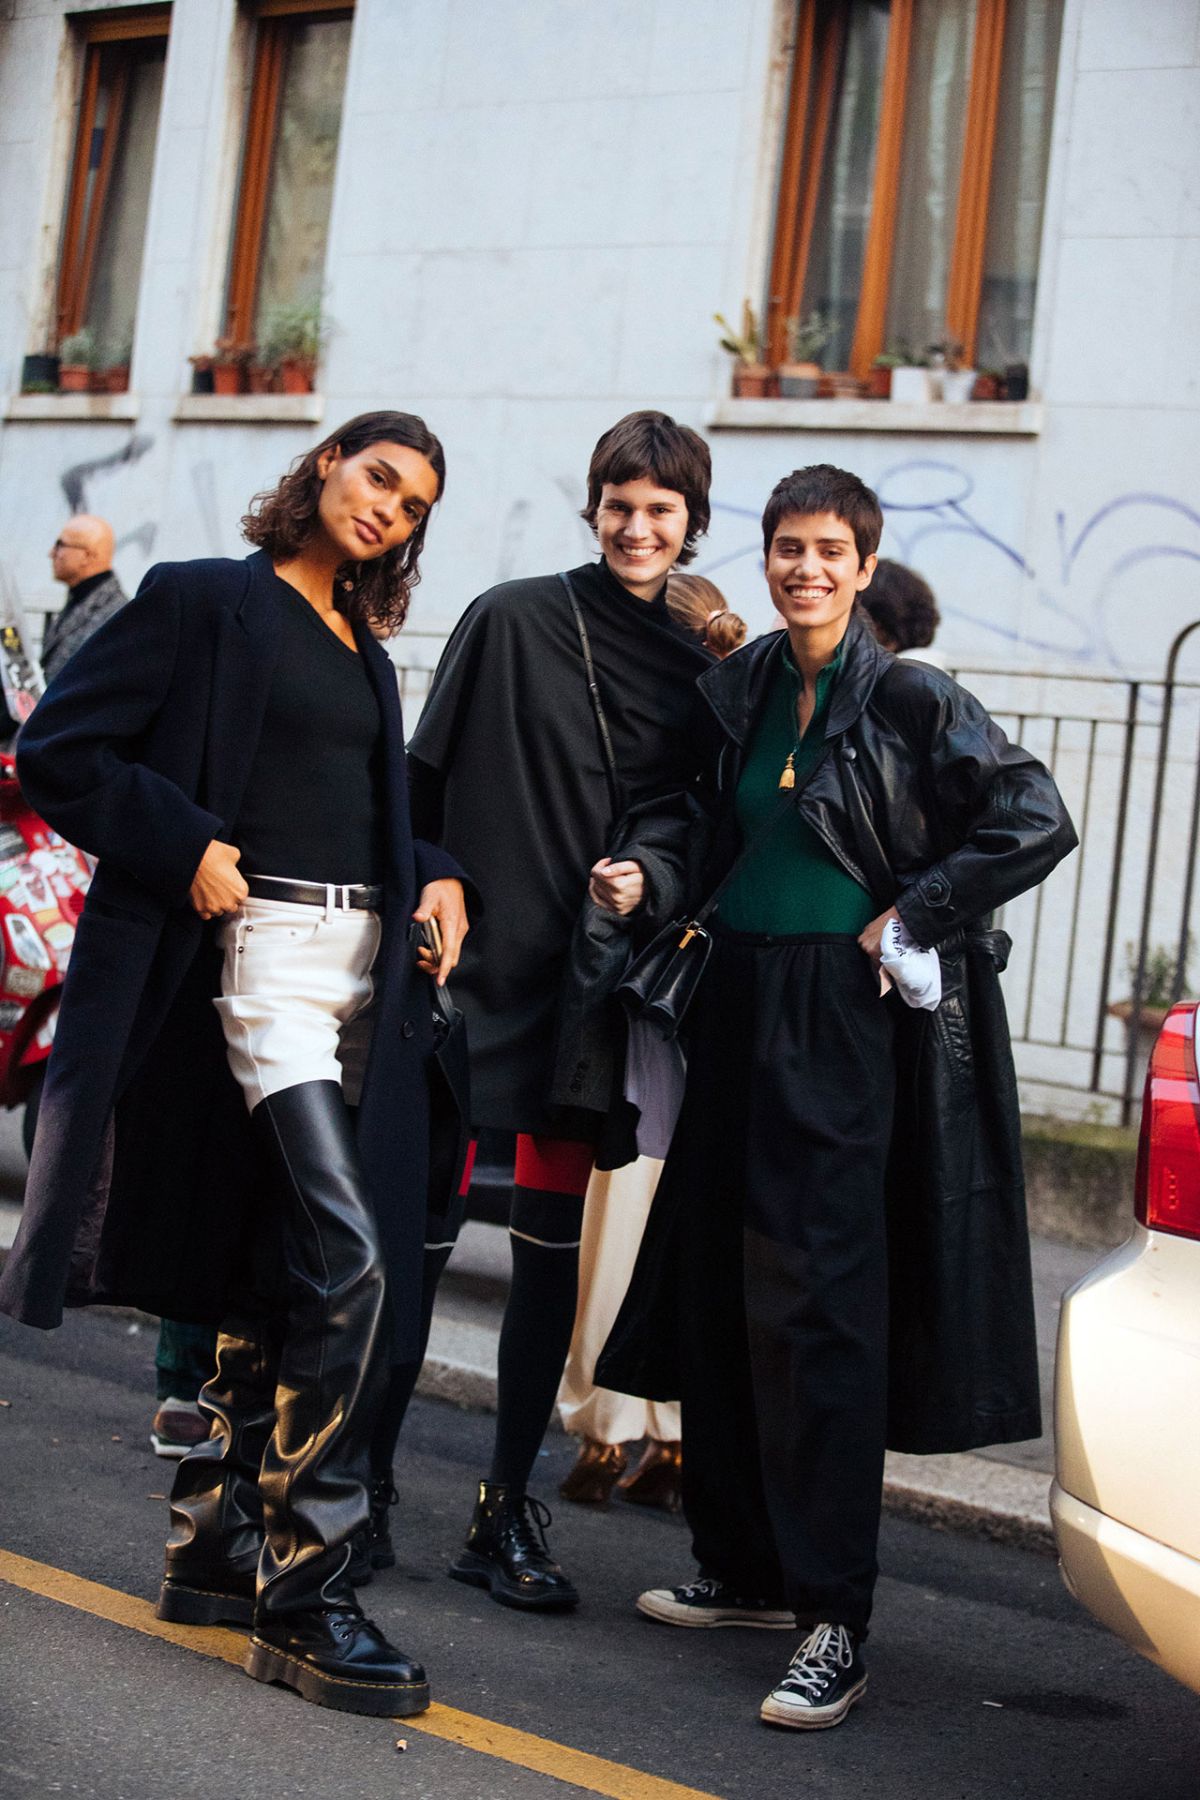 Barbara Valente, Jamily Wernke Meurer & Anna Herrera Street Style at Milan Fashion Week Fall-Winter 2020 by Melodie Jeng